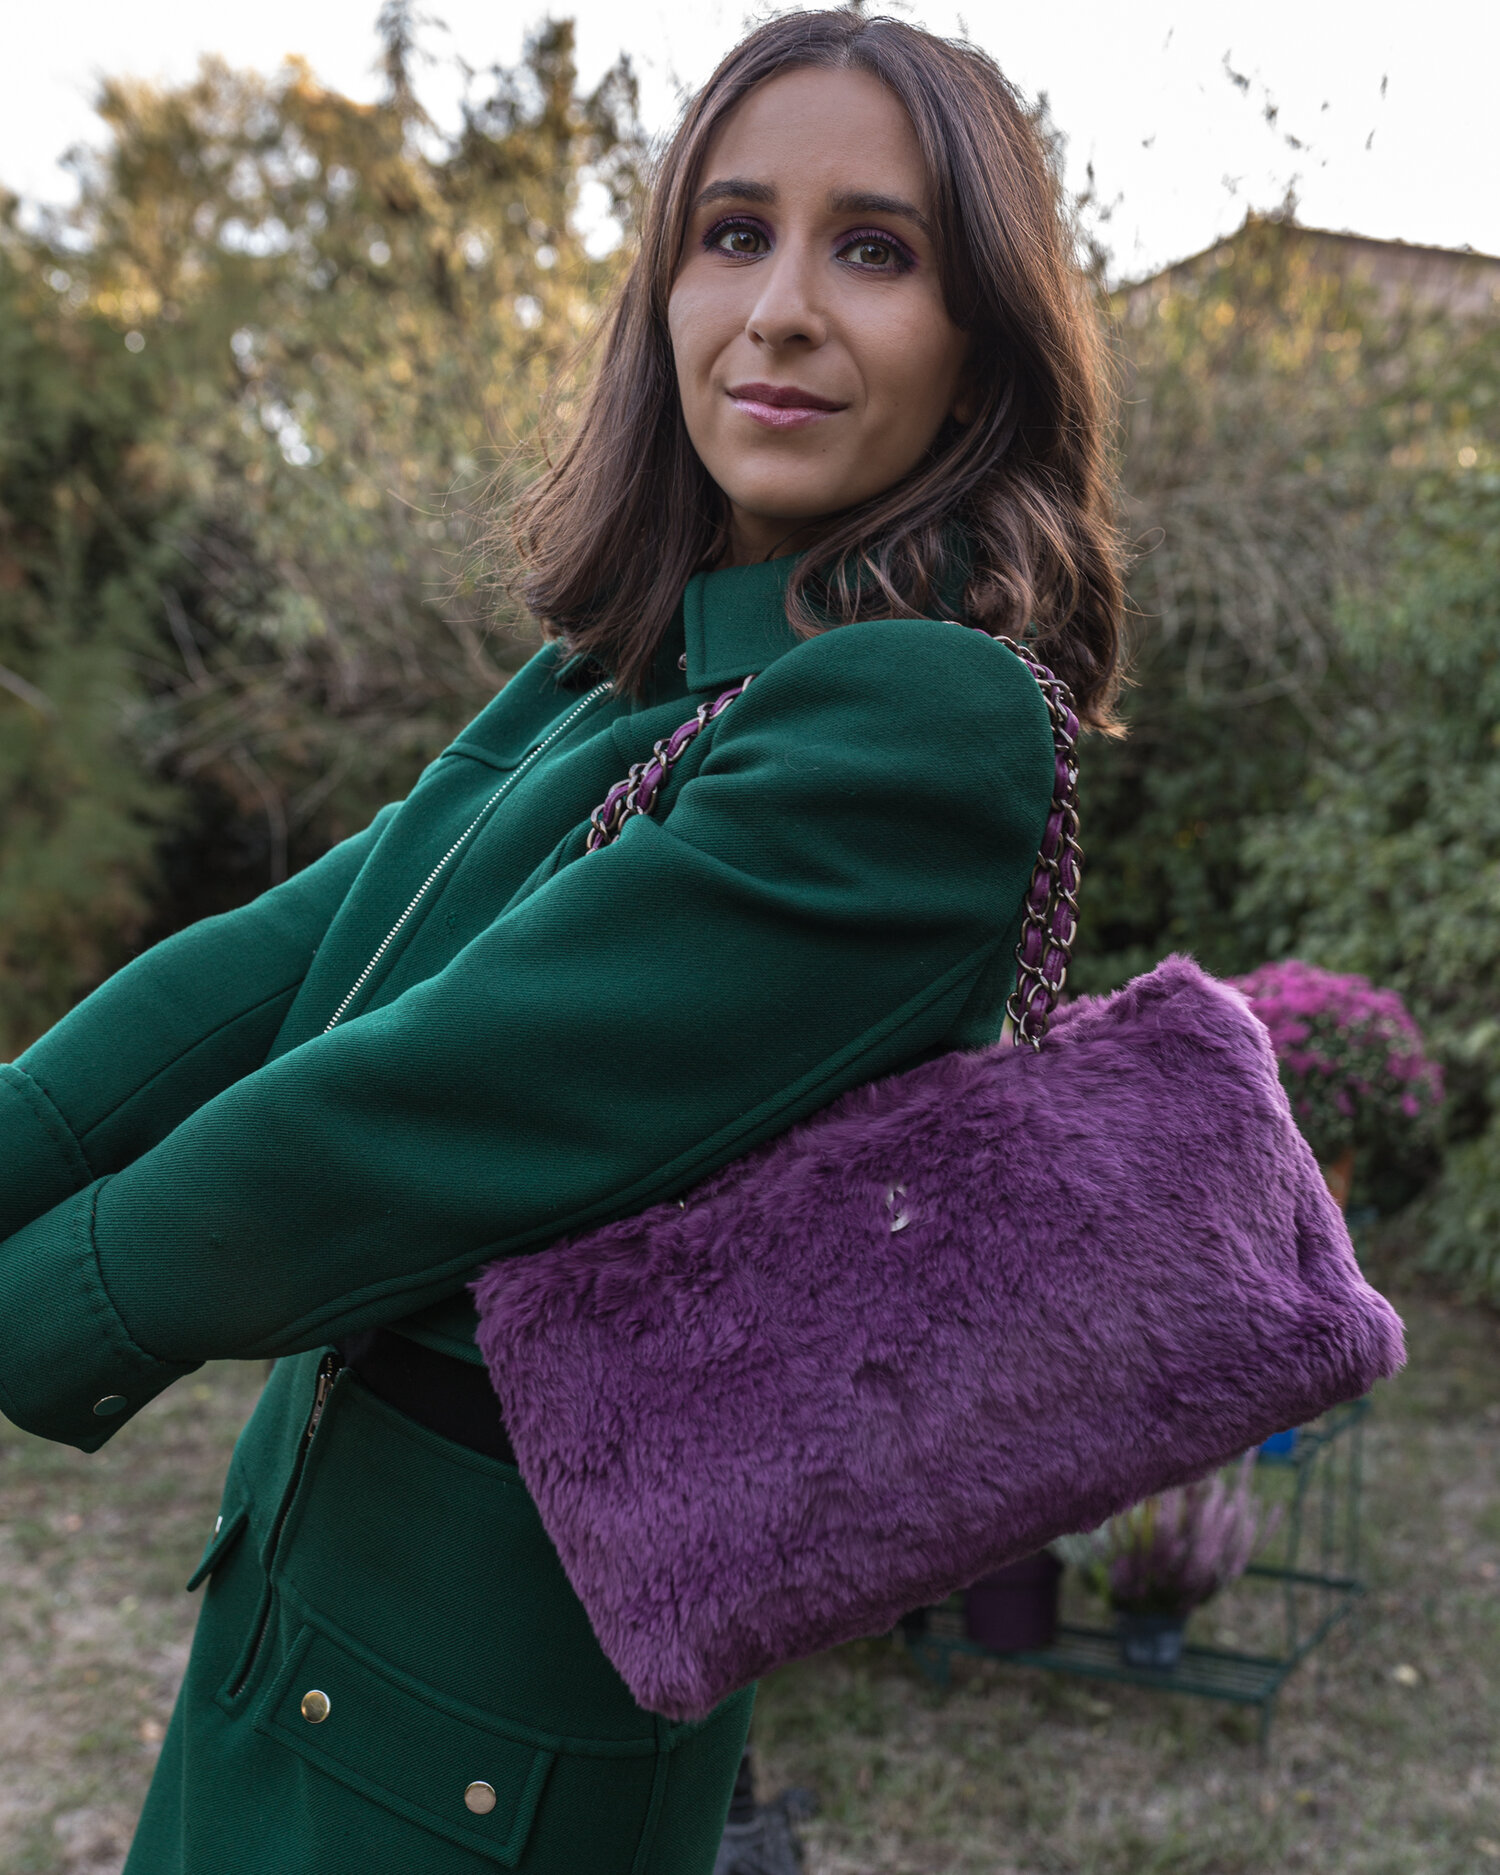 Vintage Chanel Shopping Bag in Violet Rabbit Fur — singulié